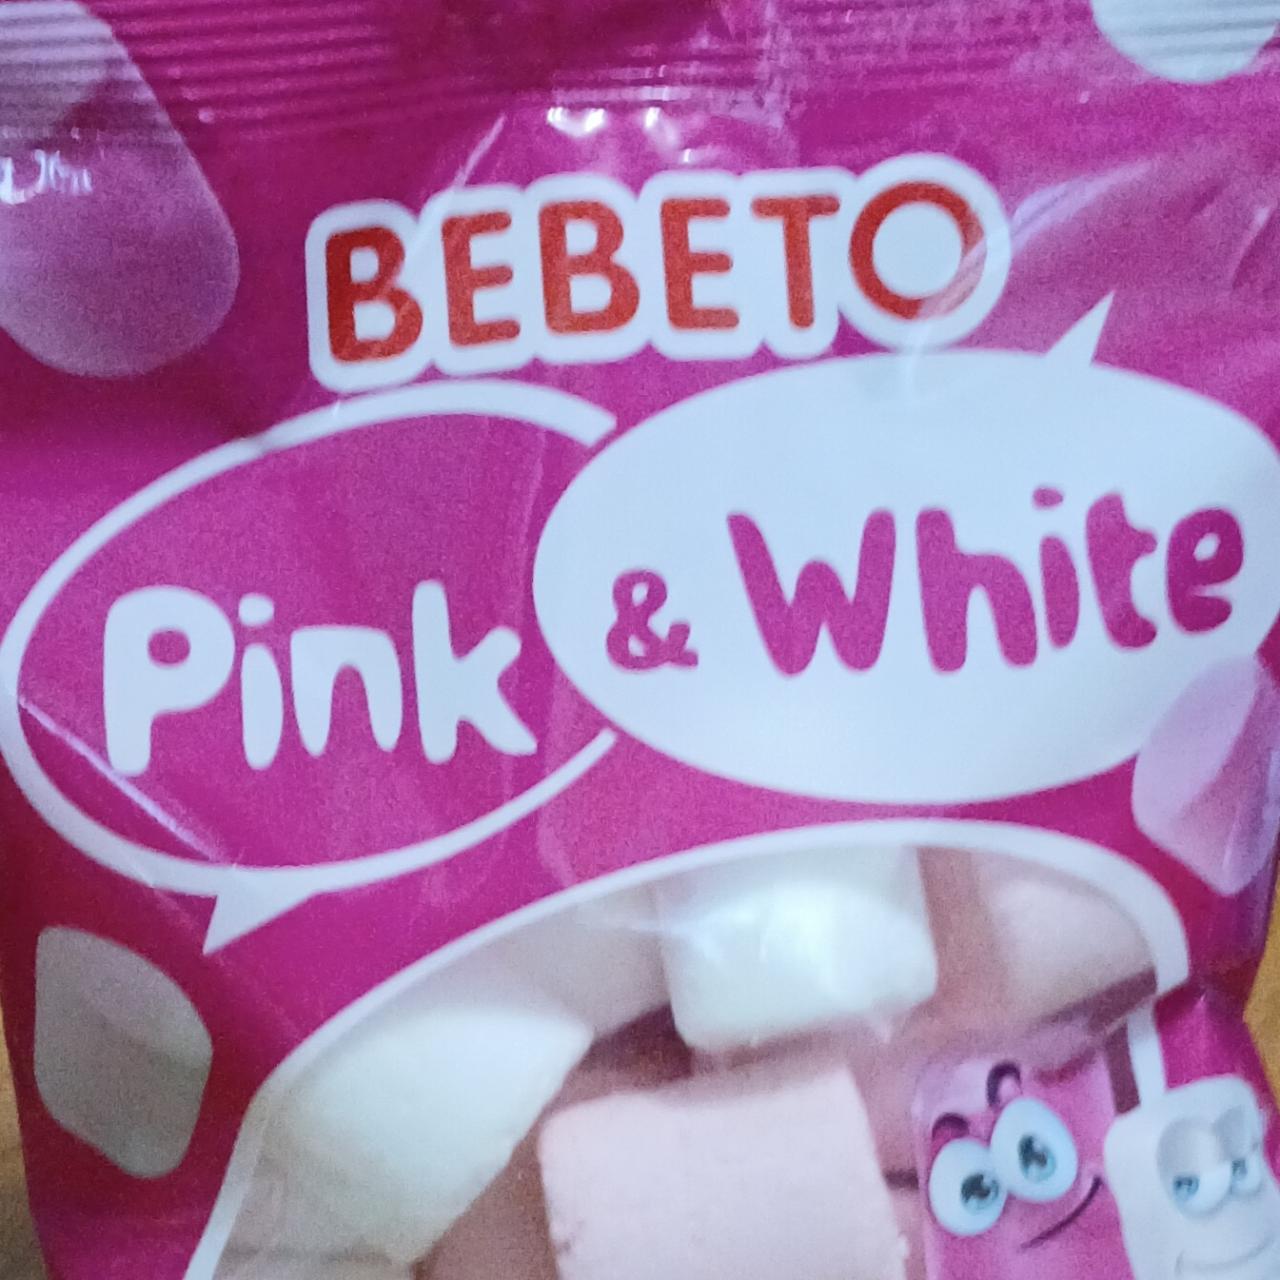 Fotografie - Marshmallow Pink & White Bebeto